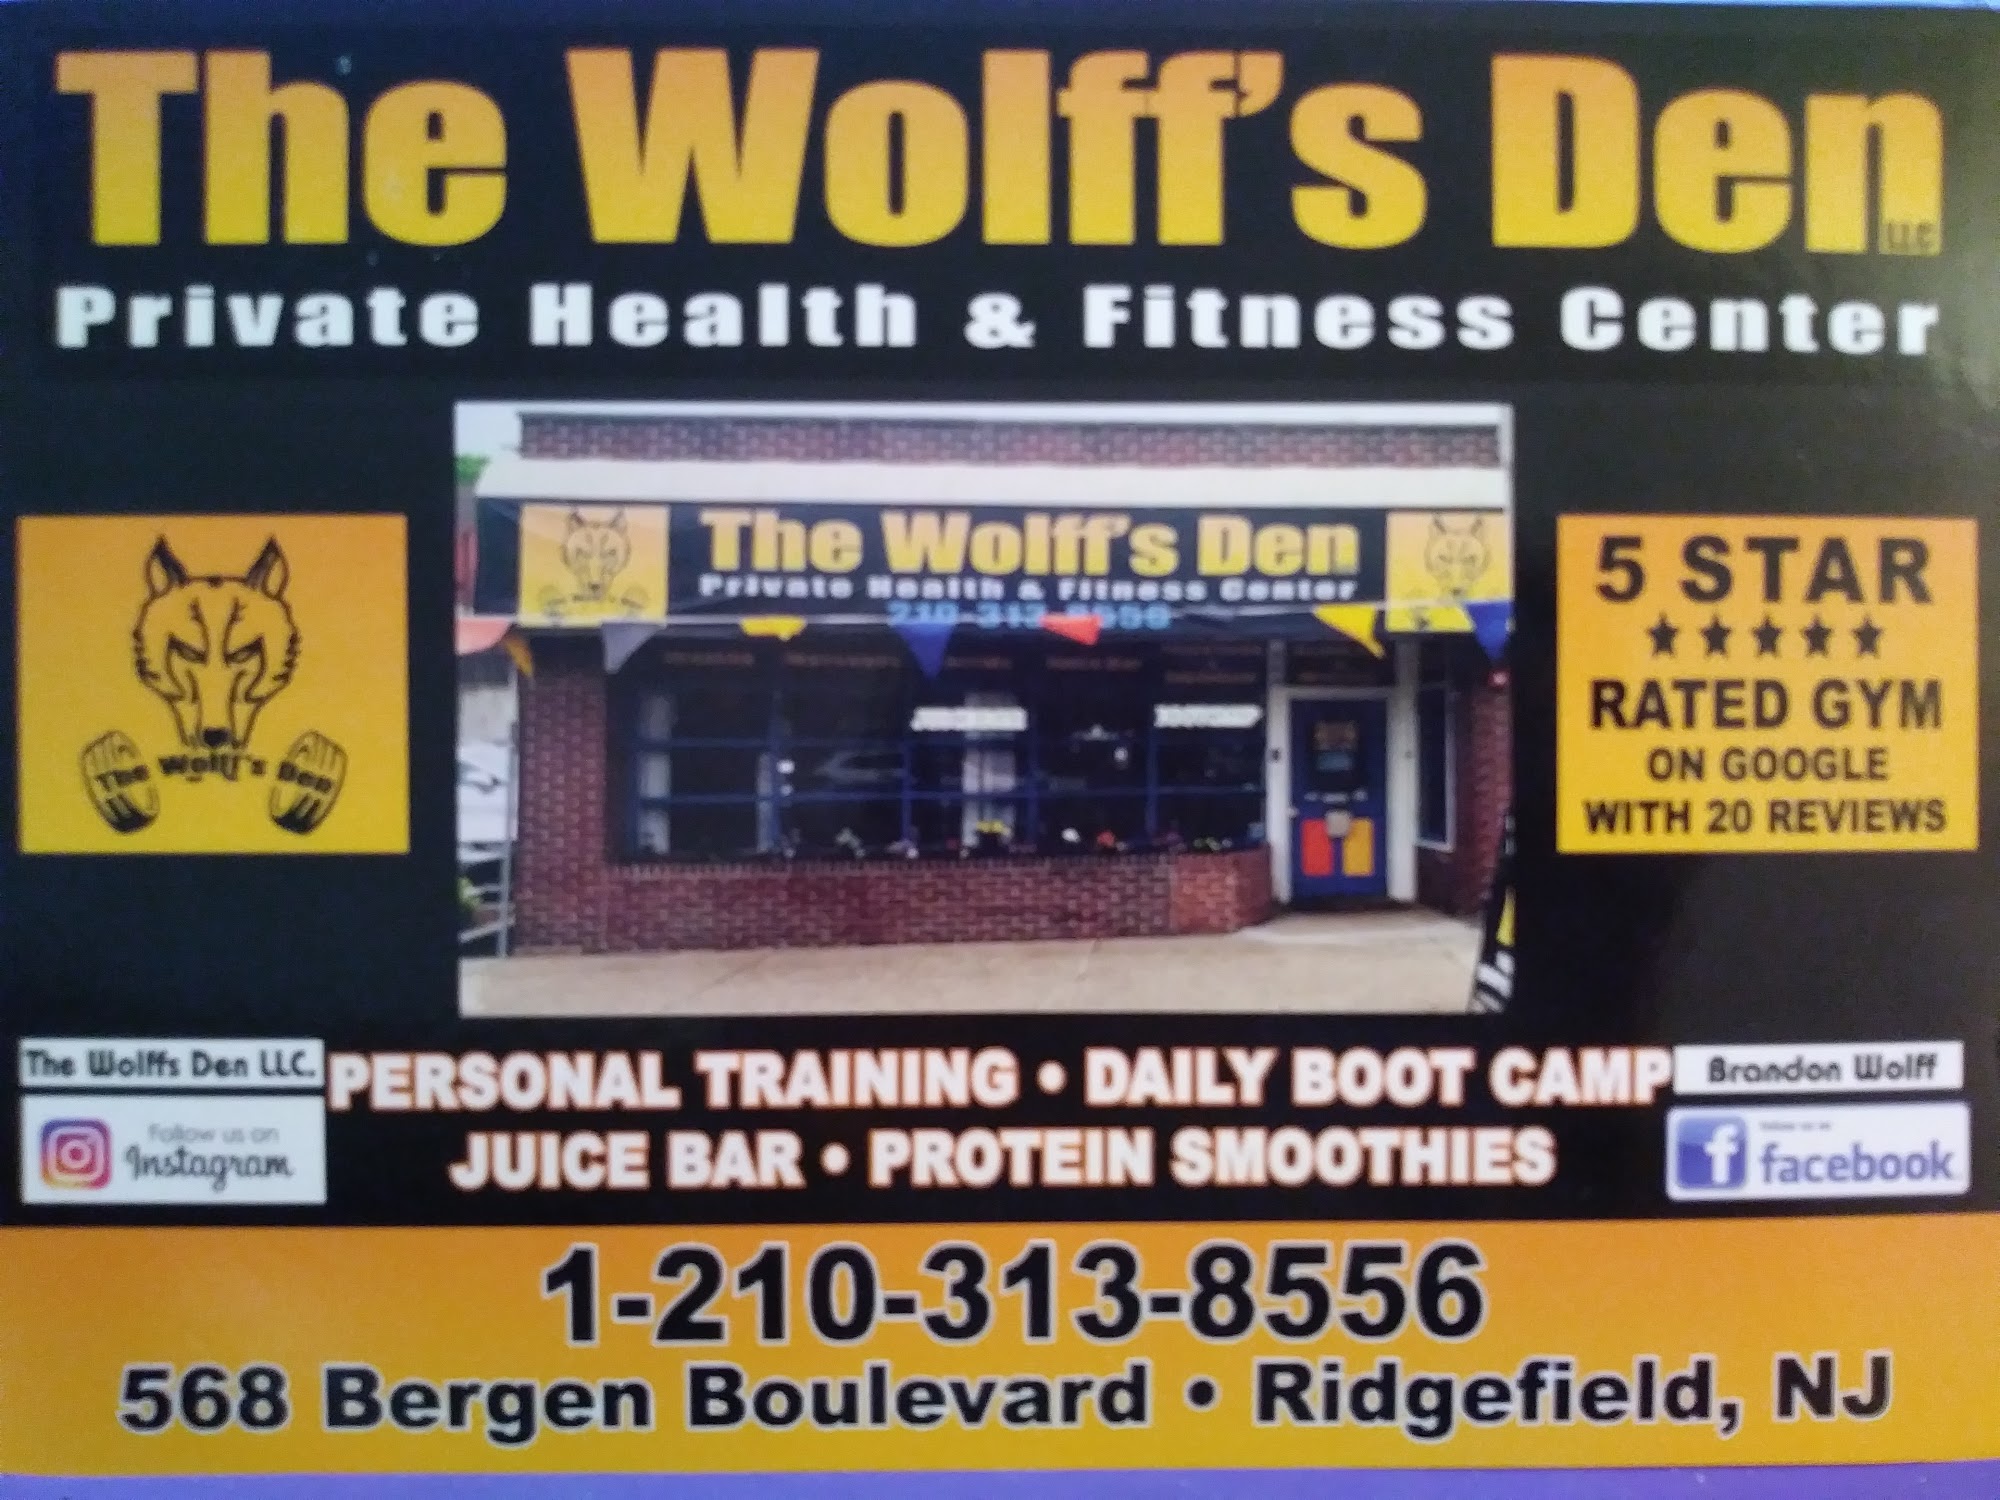 The Wolff's Den Personal Training 568 Bergen Blvd, Ridgefield New Jersey 07657